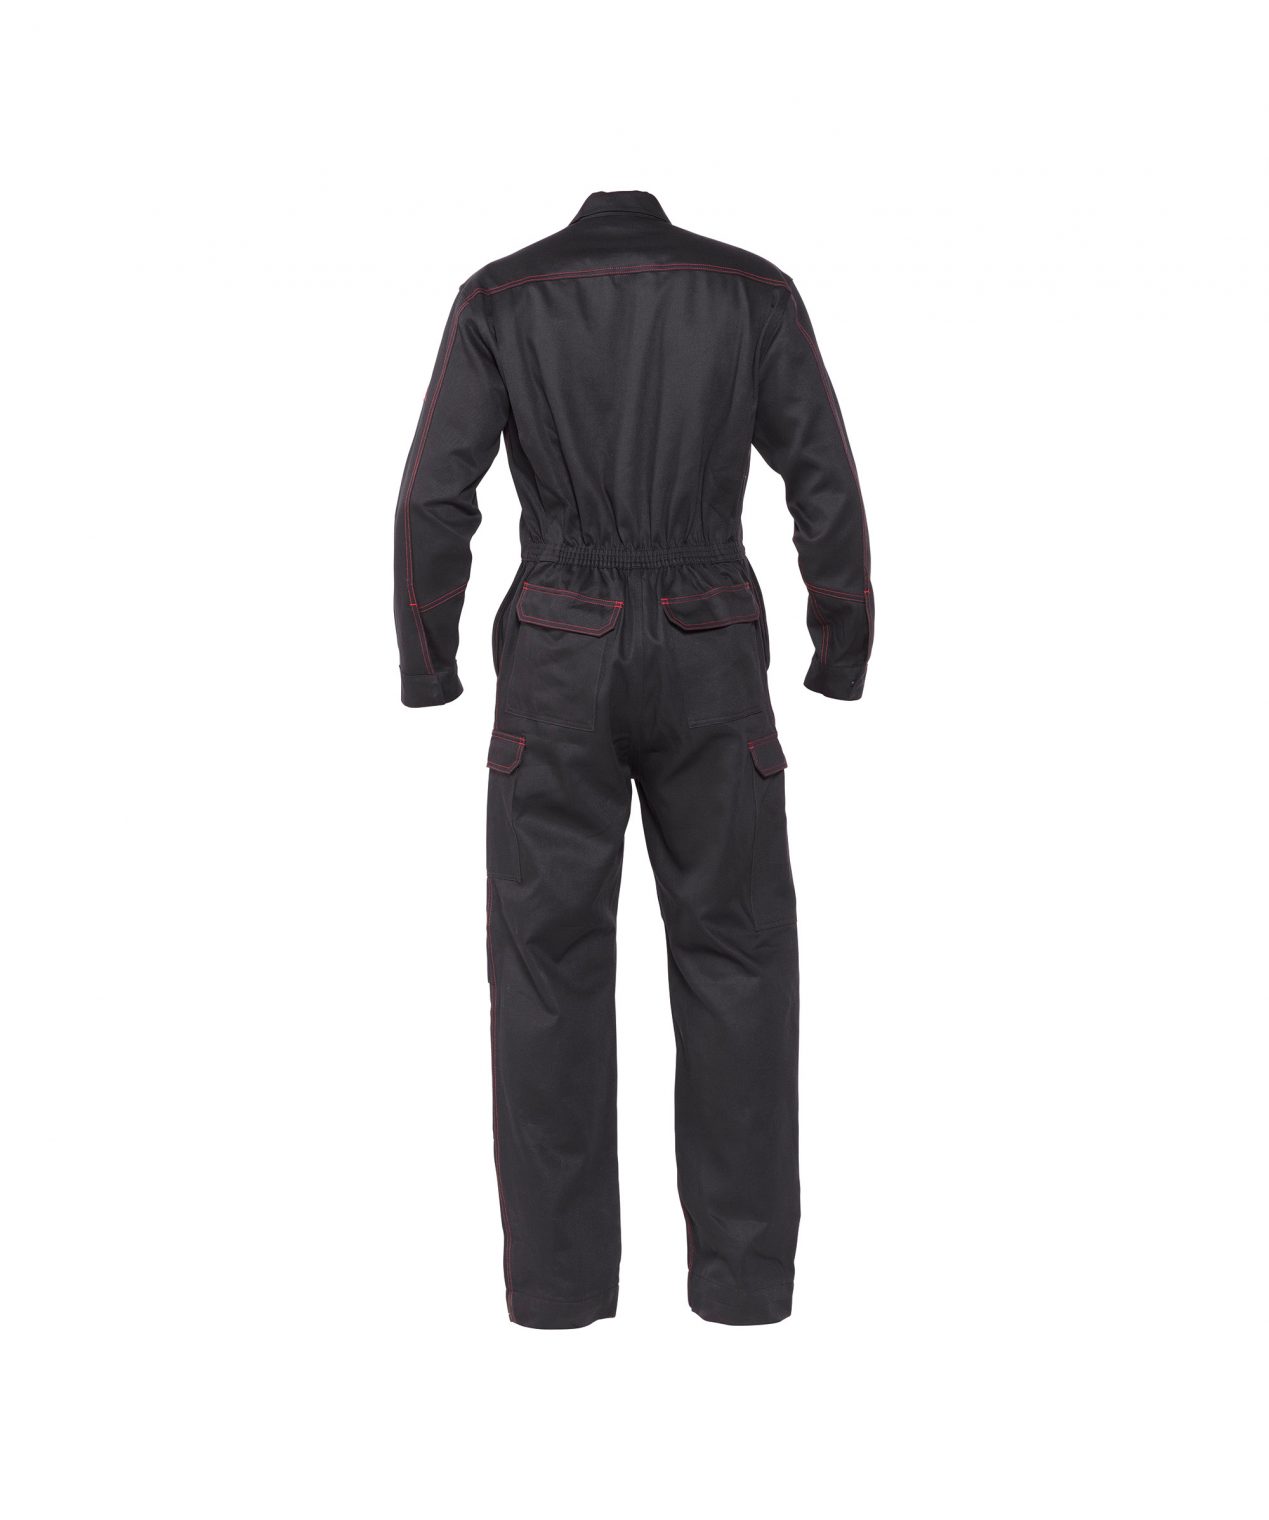 toronto flame retardant overall with knee pockets black back